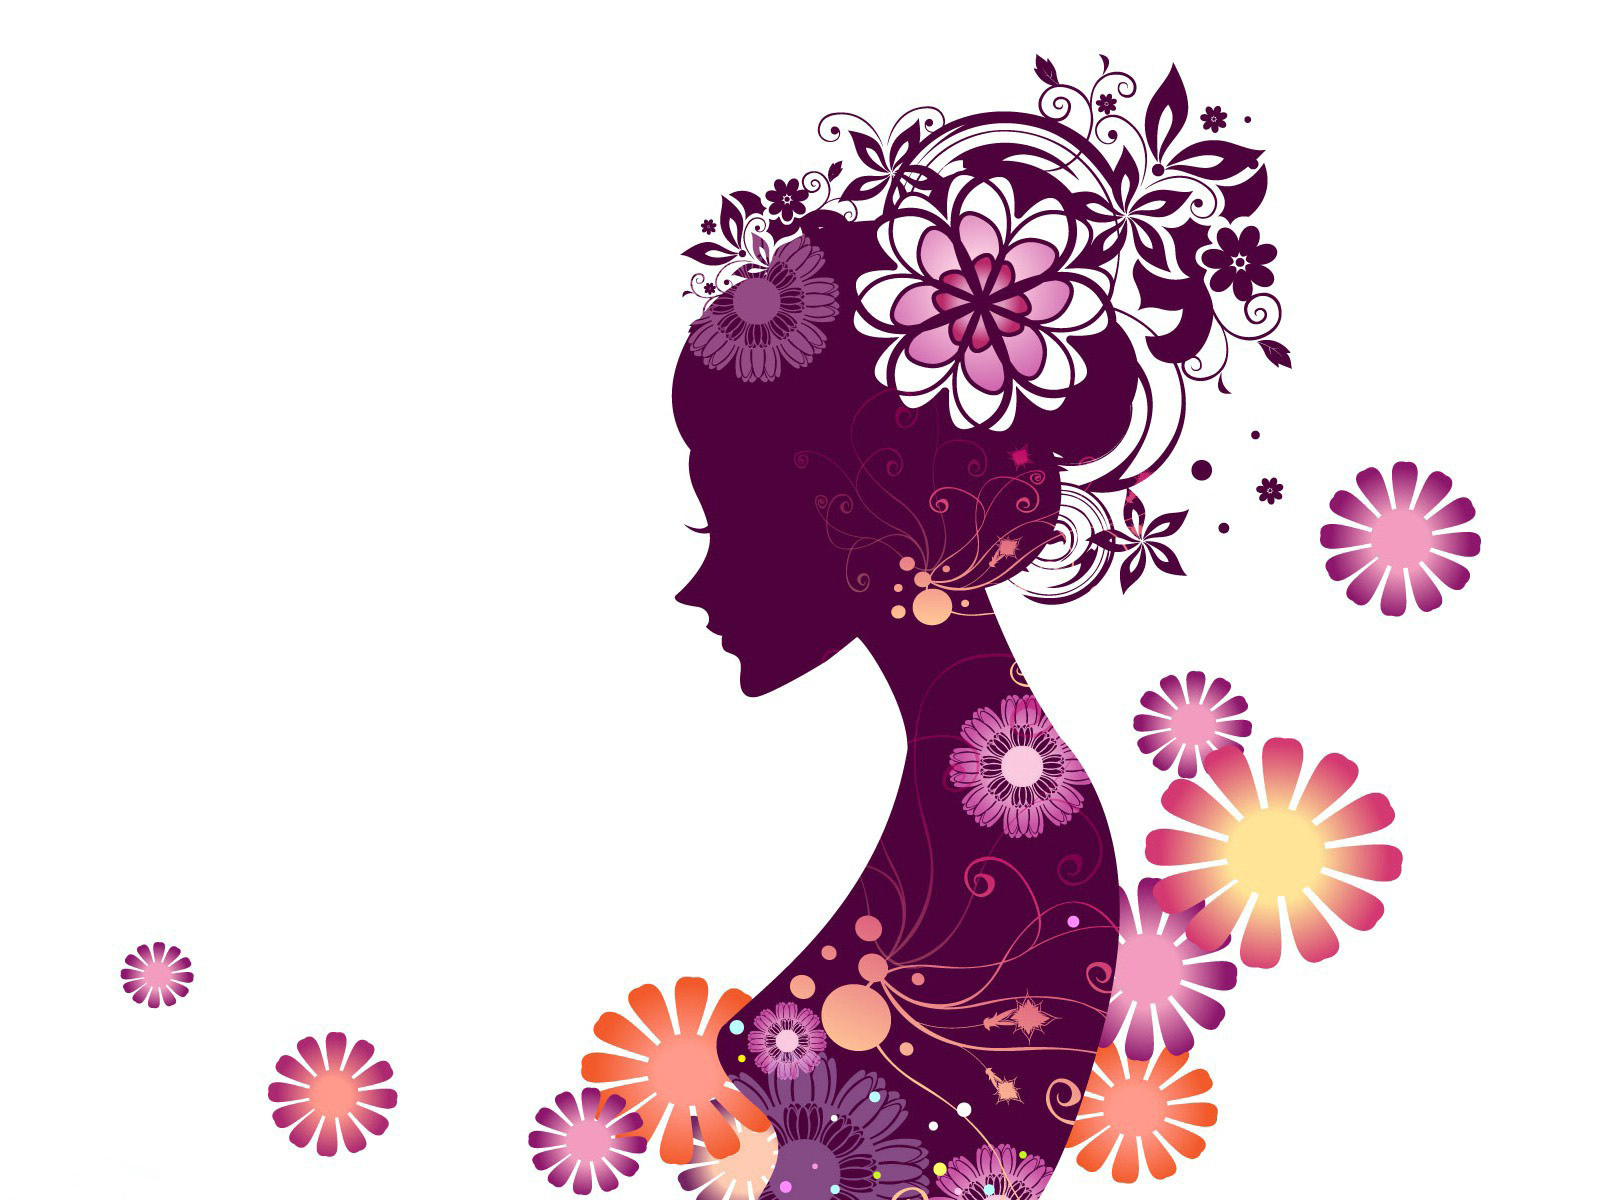 wallpaper de niñas,violet,illustration,purple,graphic design,plant